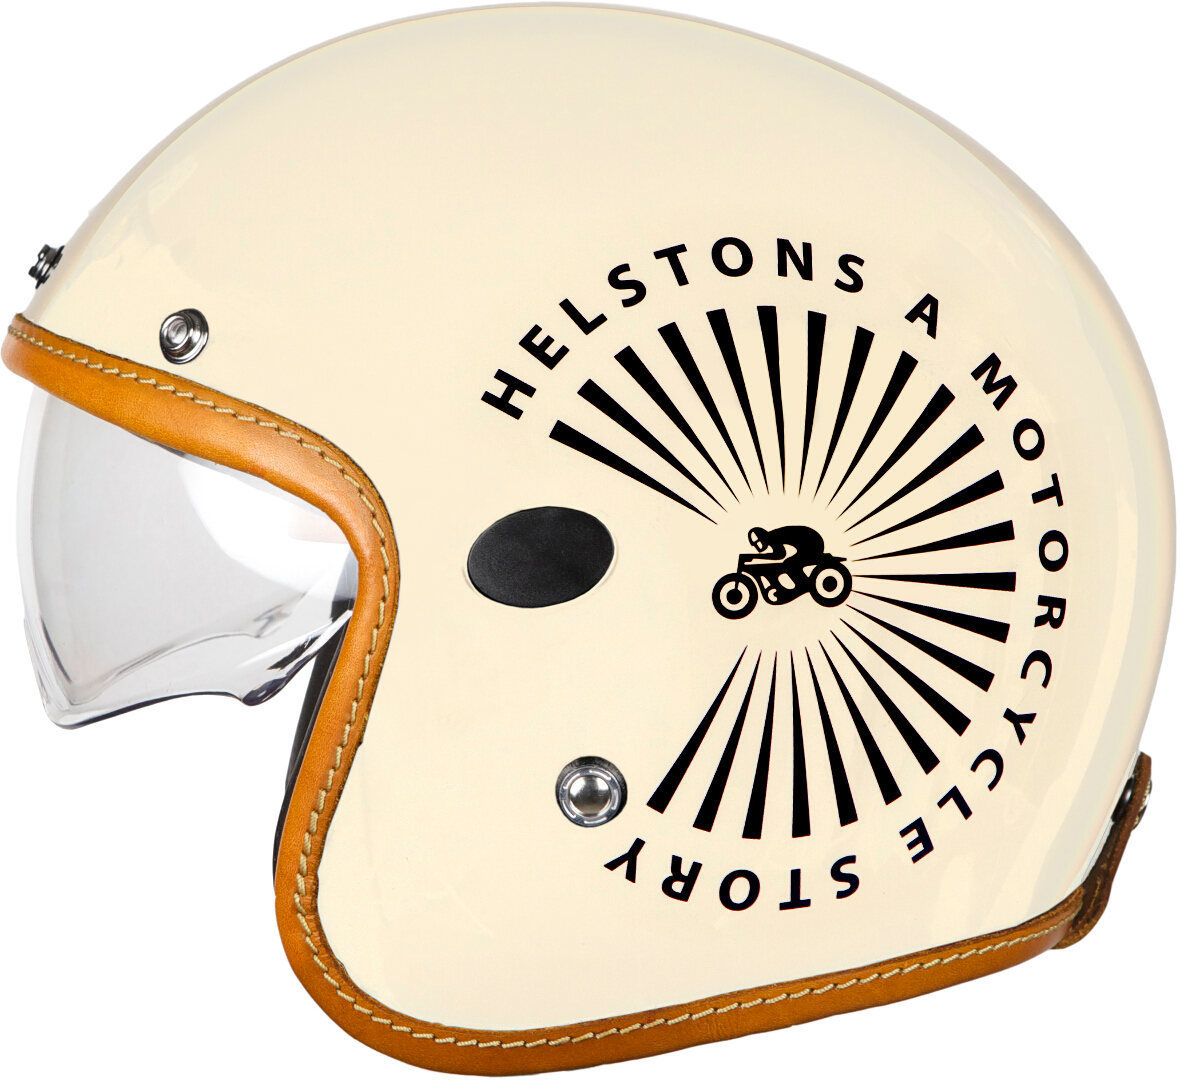 Helstons Sun Carbon Jet Helmet, beige, Size XL, beige, Size XL